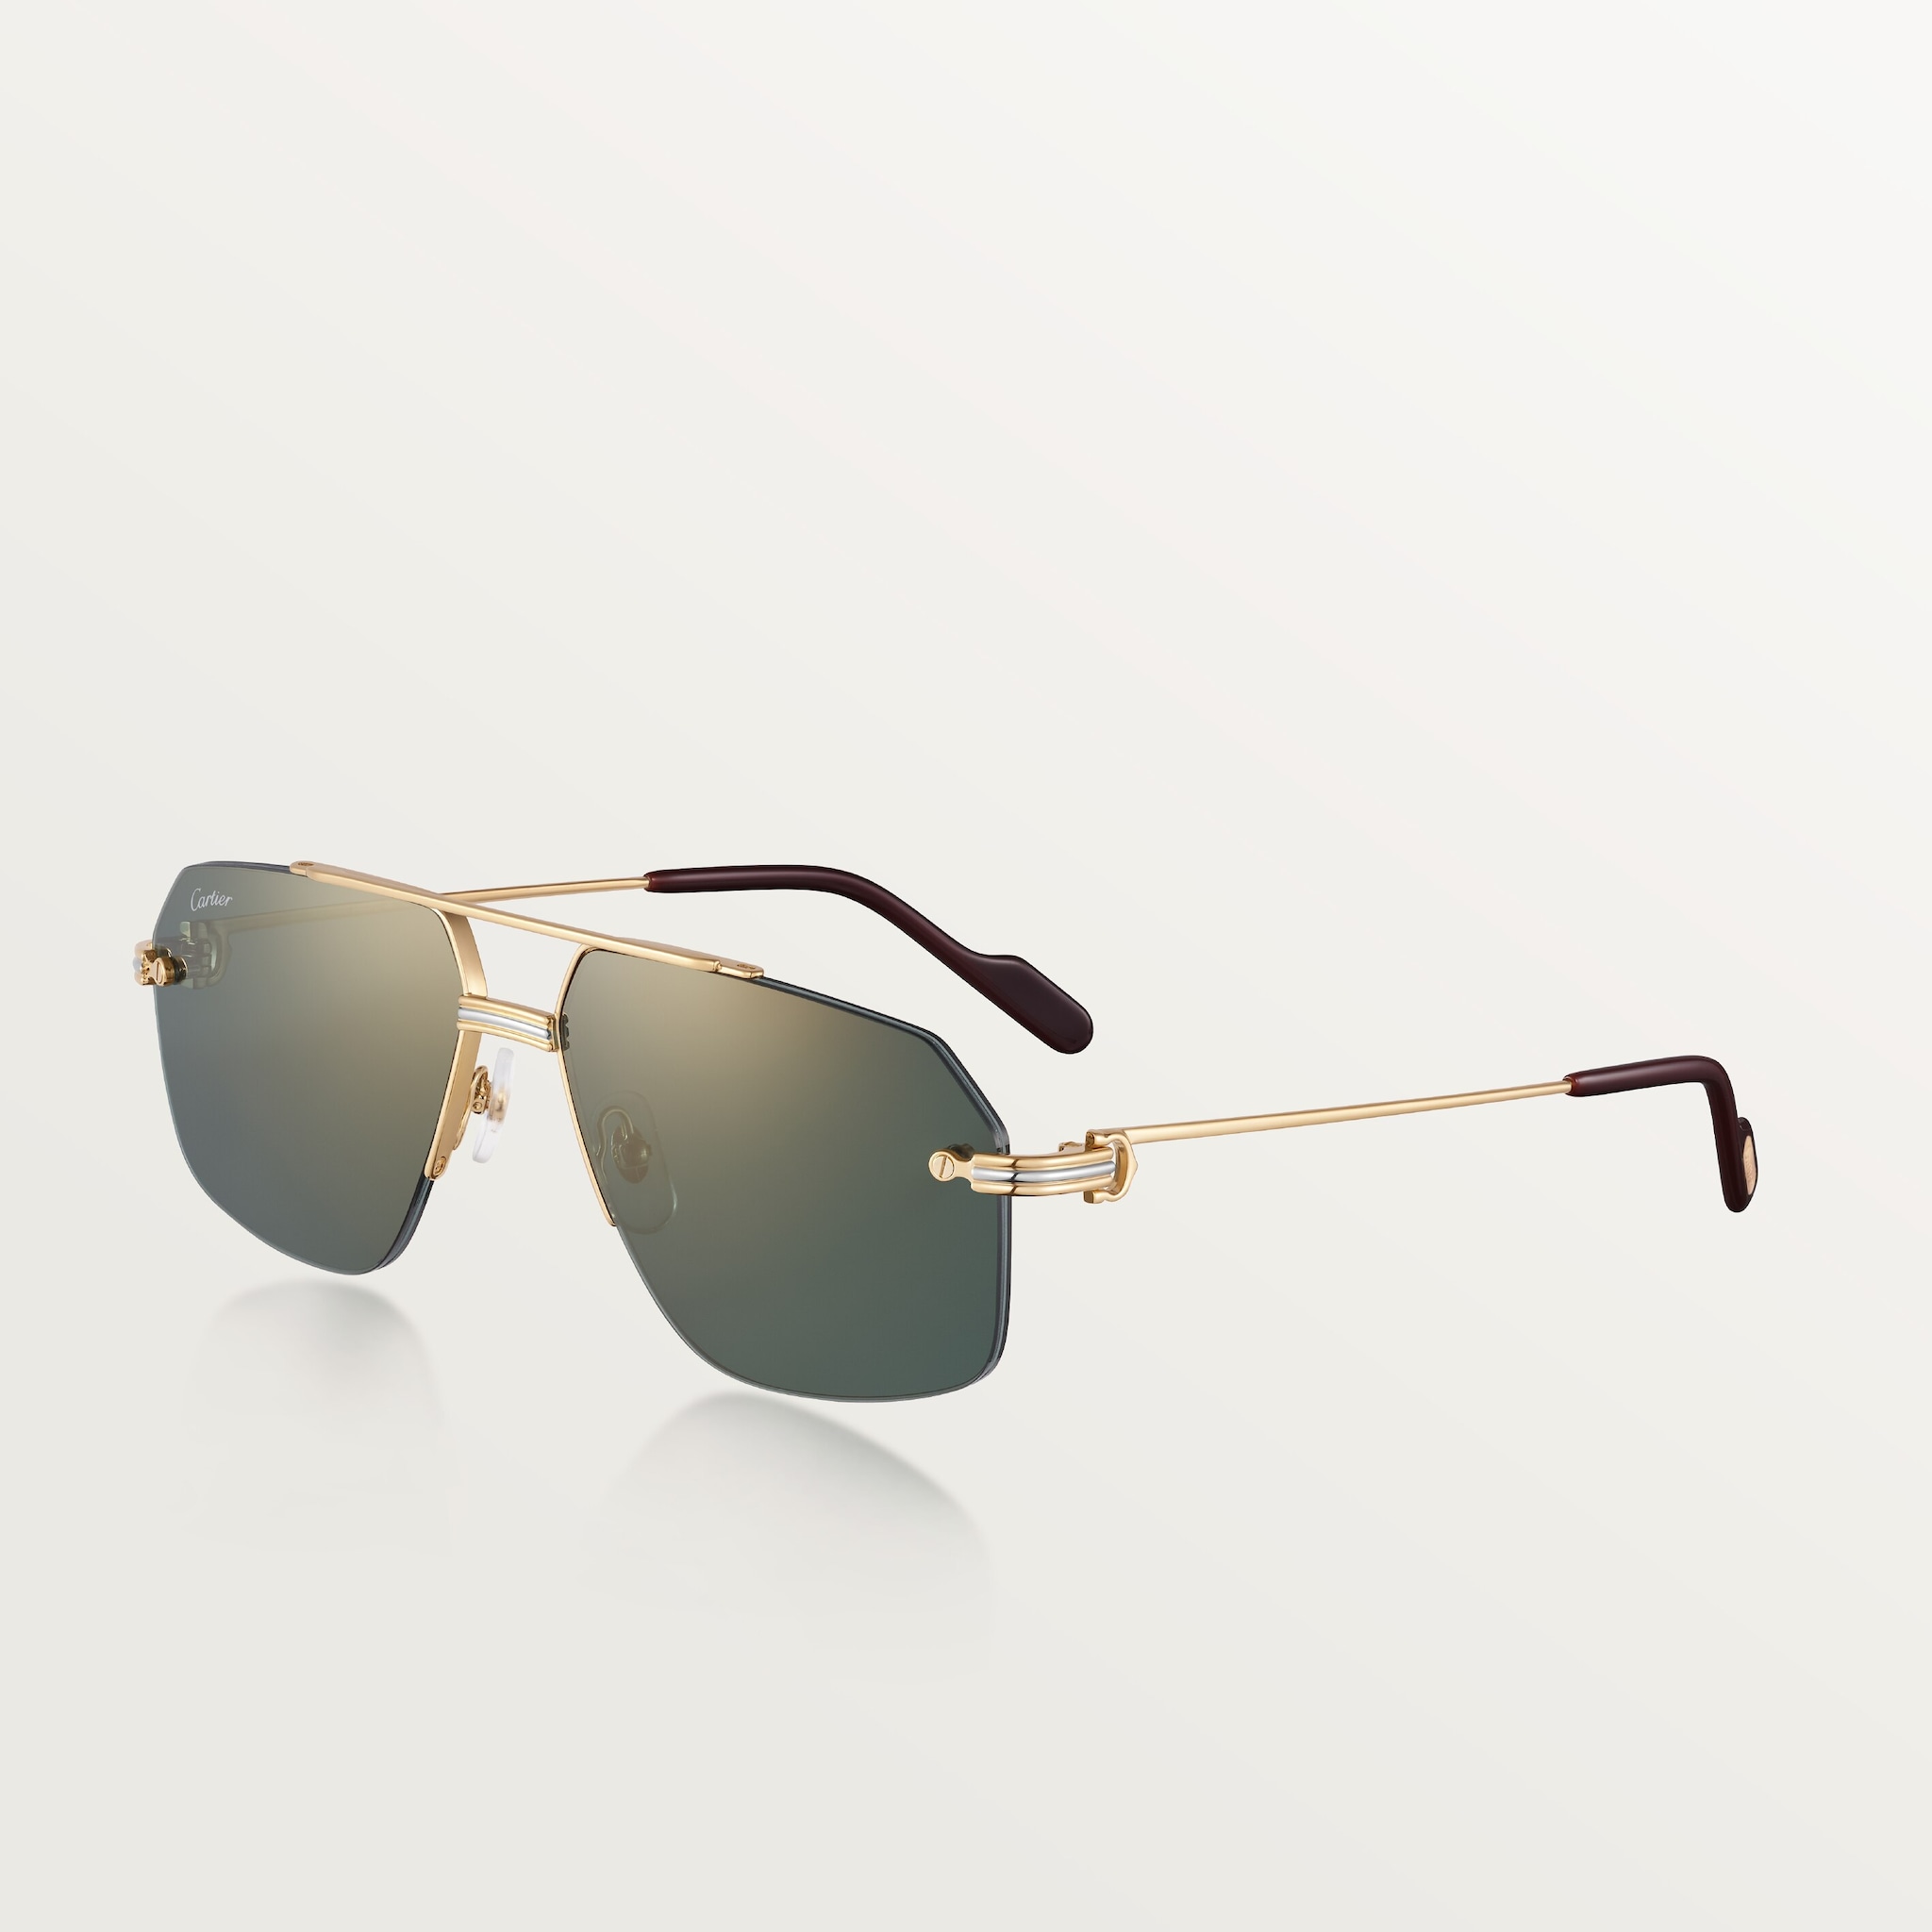 Première de Cartier sunglassesSmooth golden-finish metal, green lenses